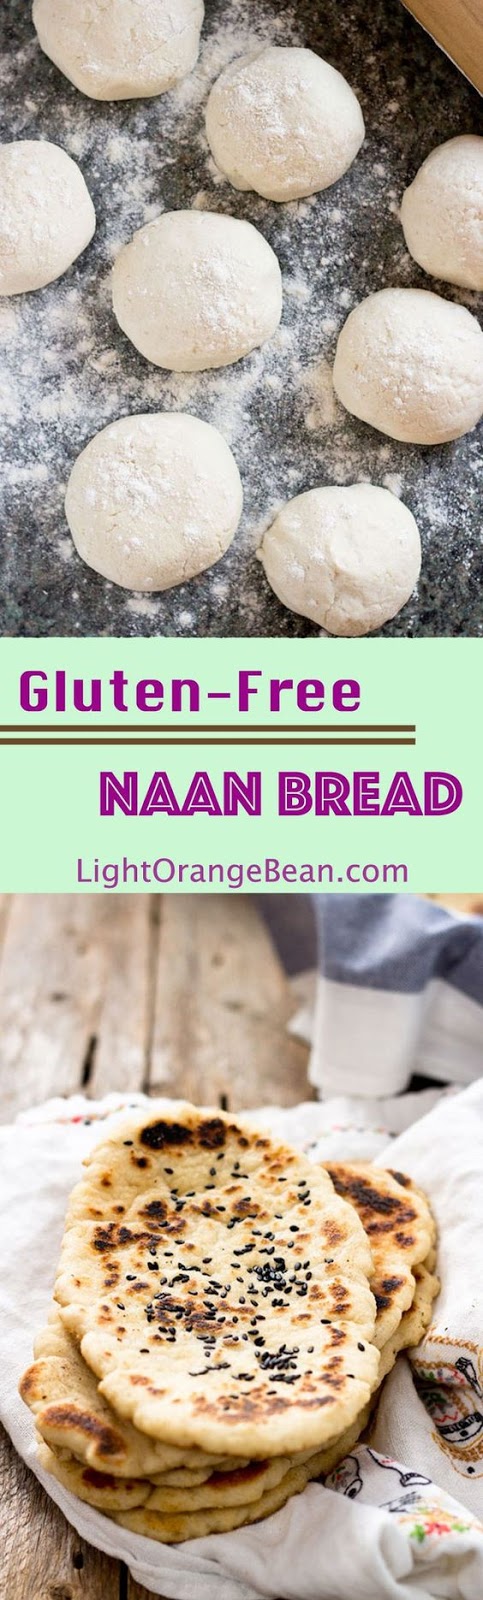 Gluten-Free Naan Bread